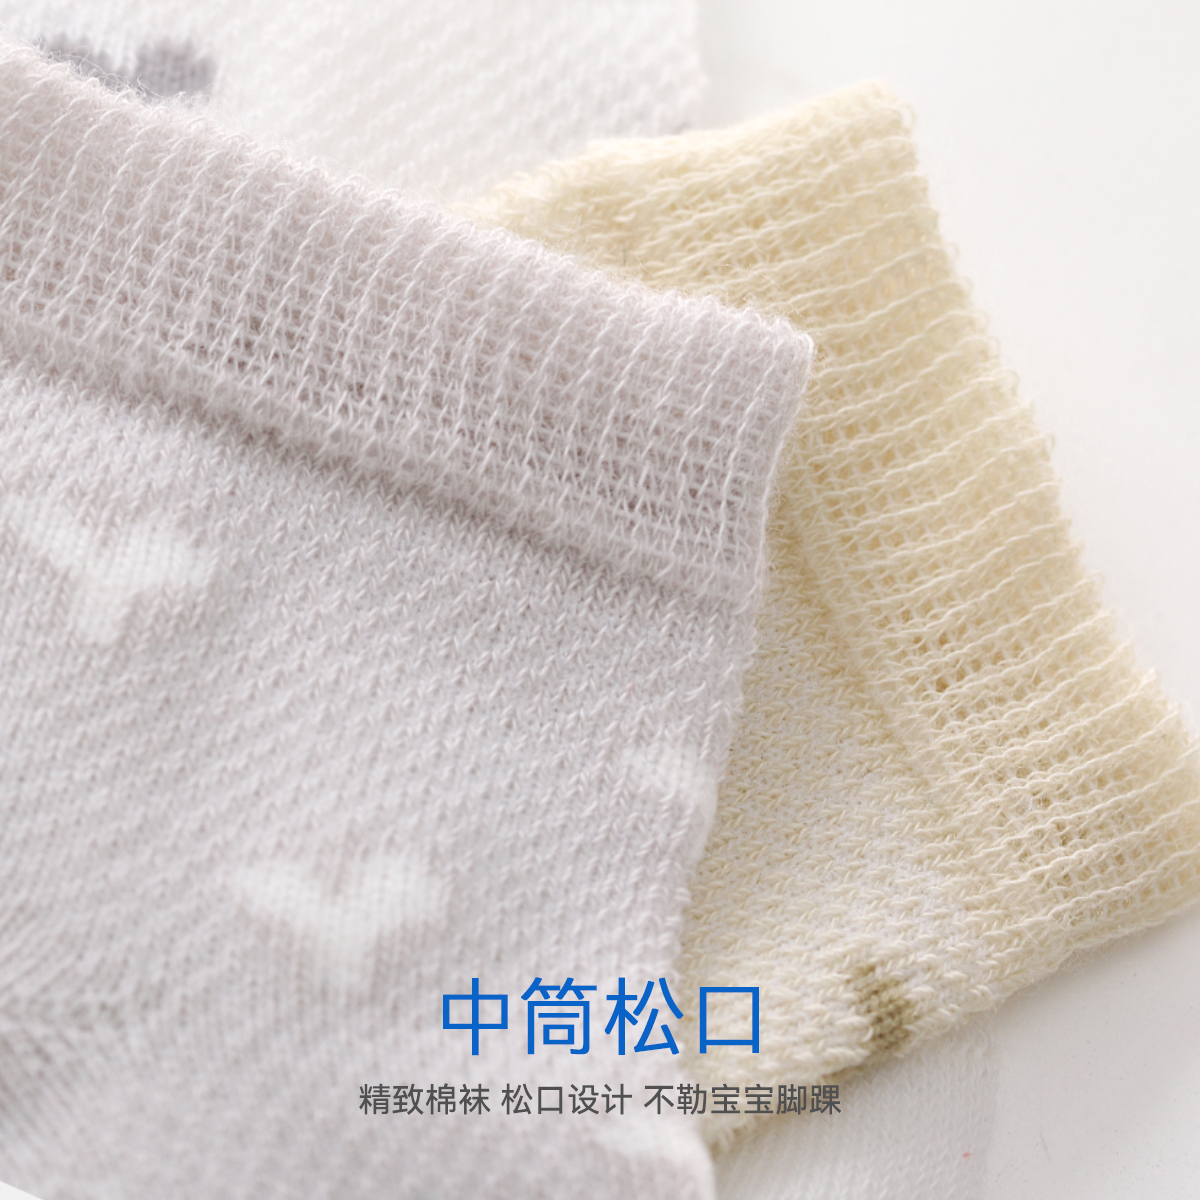 aqpa婴幼童袜子夏季超薄宝宝婴儿袜棉袜中筒袜夏季网眼透气3双装